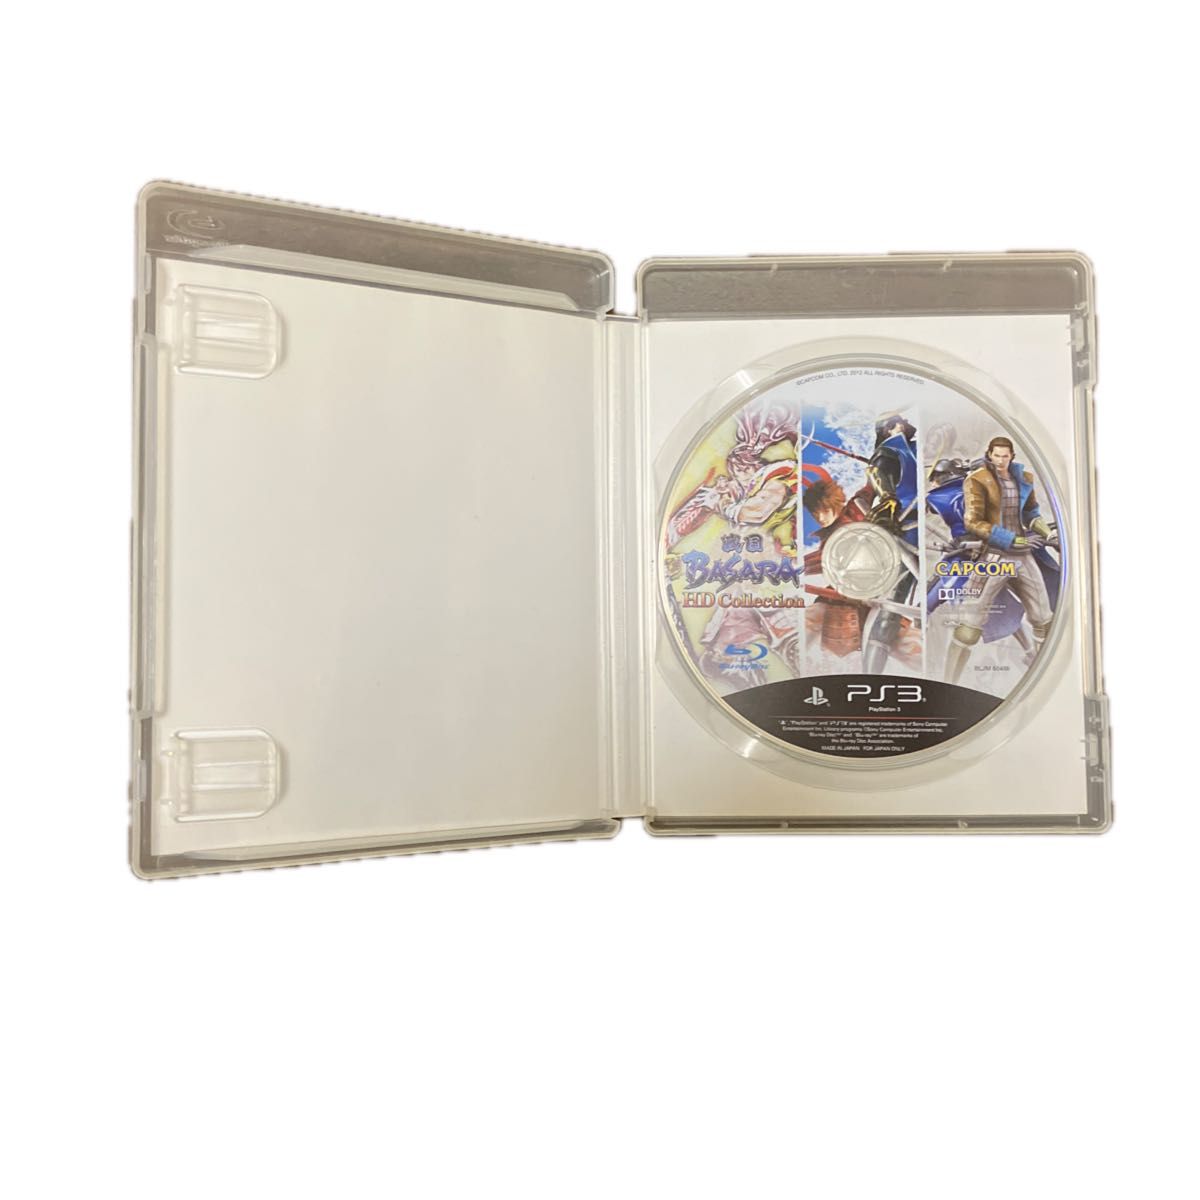 【PS3】 戦国BASARA HD Collection